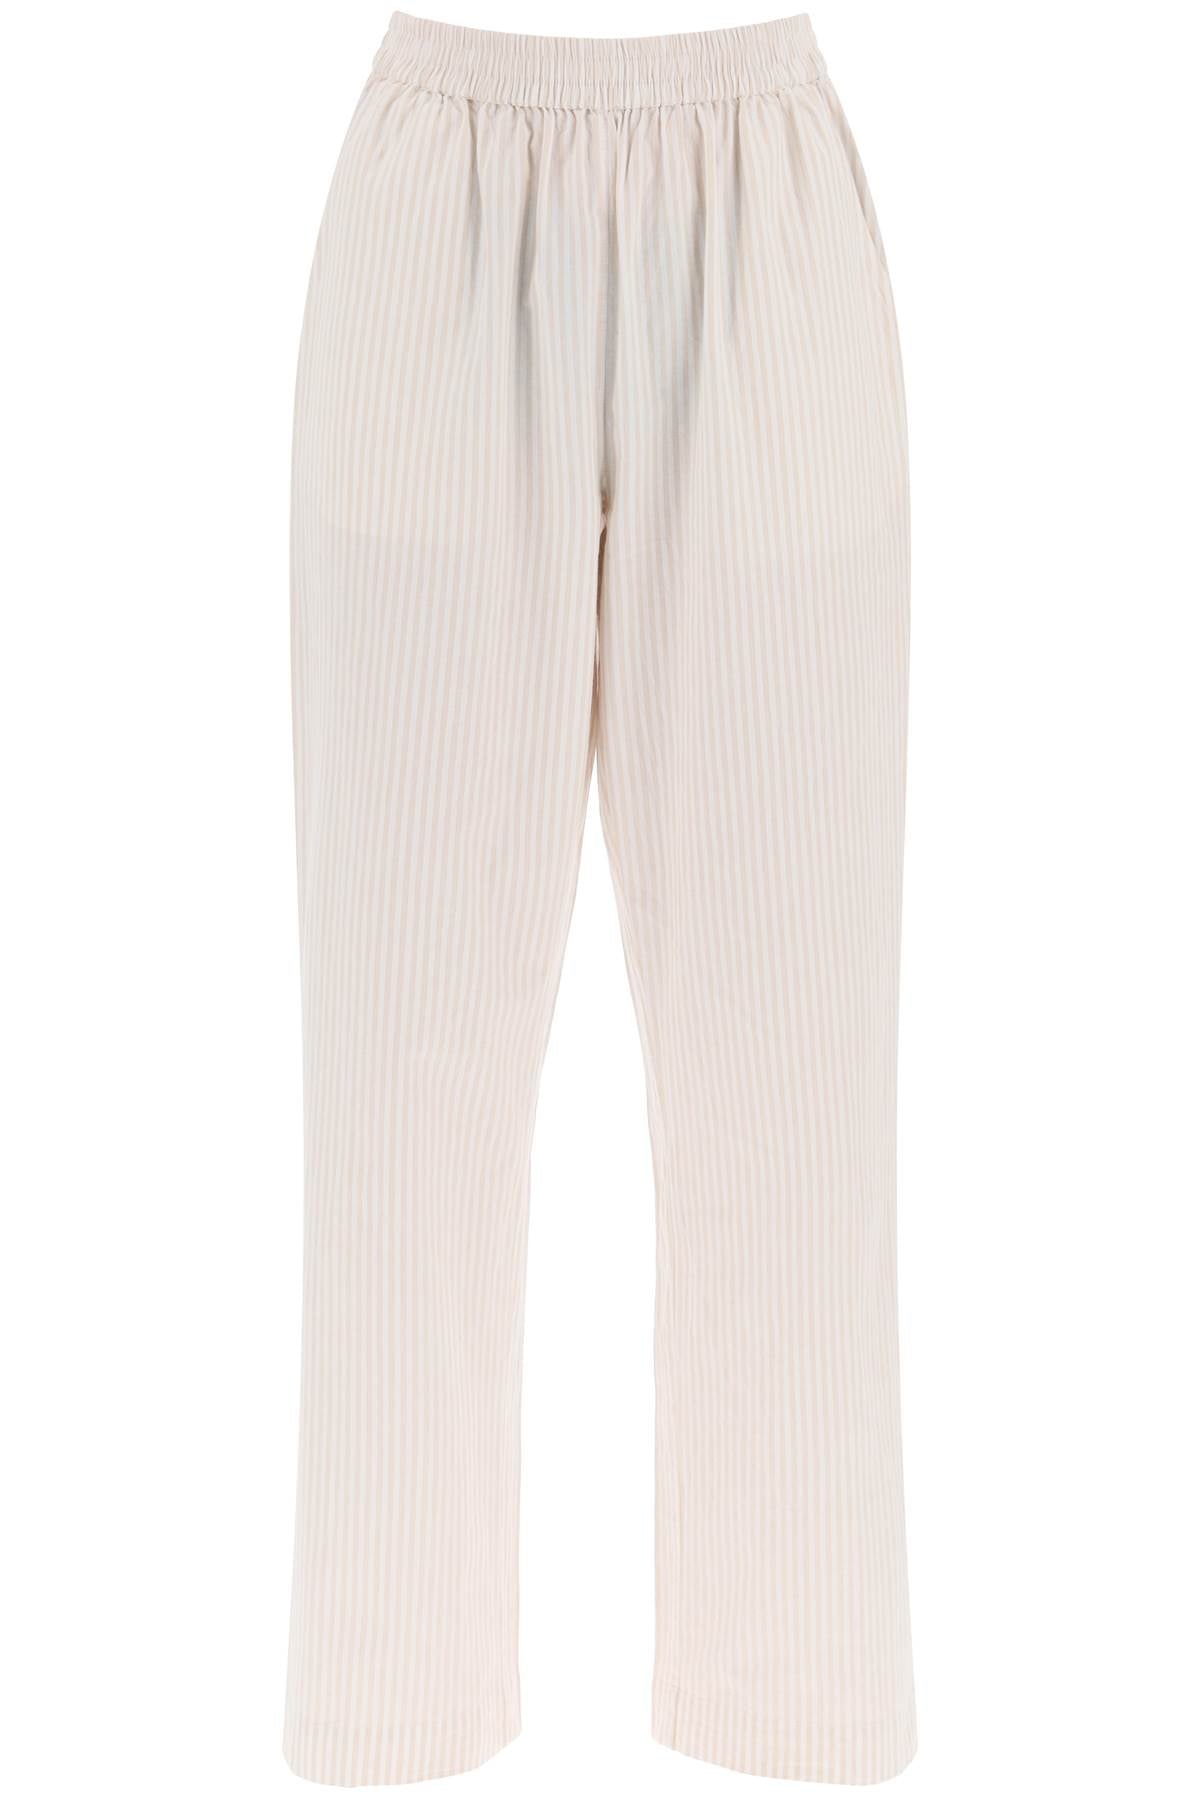 Skall studio "organic cotton striped claudia pants"-0